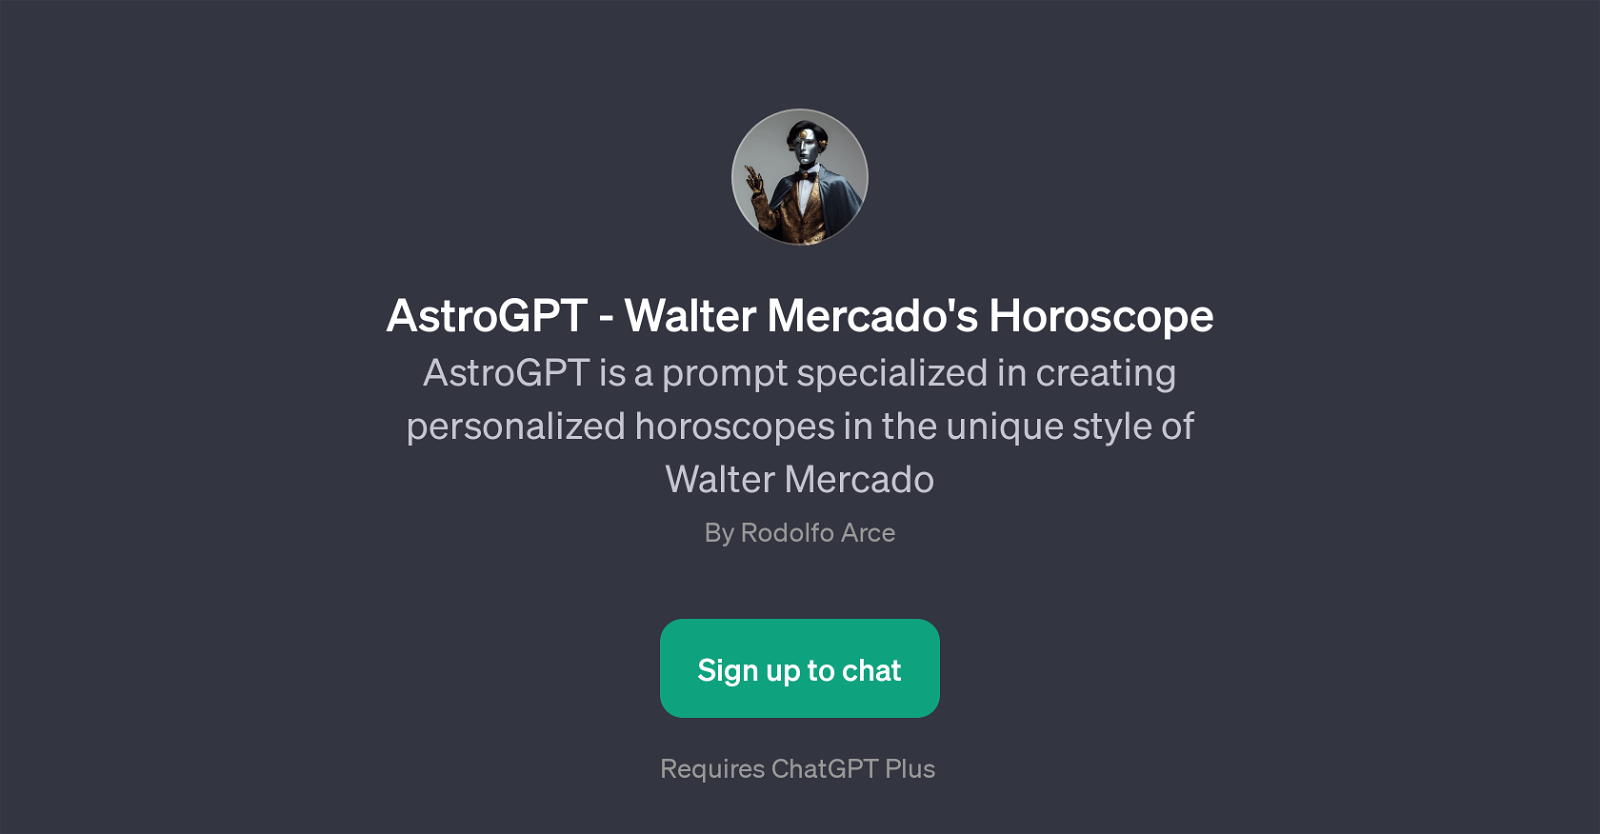 AstroGPT - Walter Mercado's Horoscope website